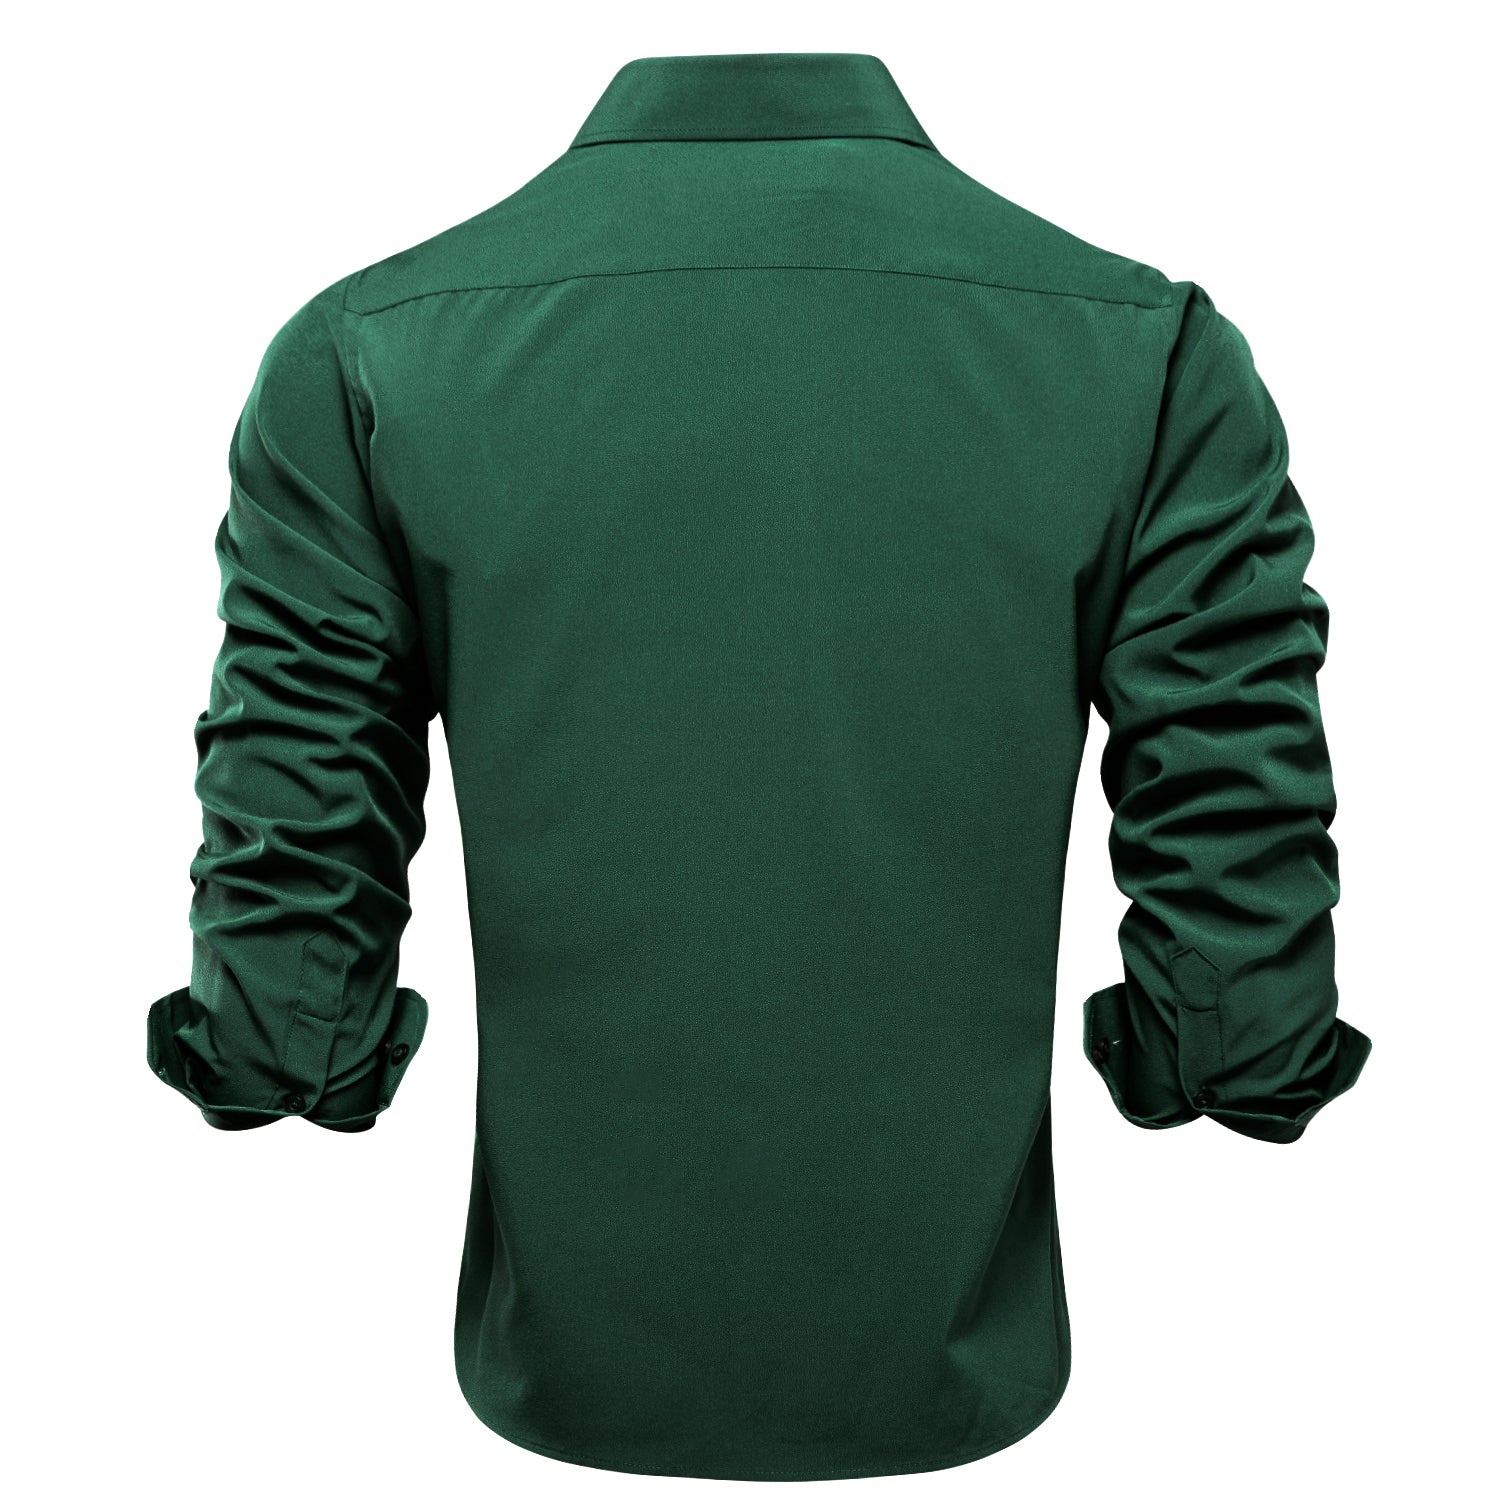 New Emerald Green Solid Stretch Men's Long Sleeve Shirt